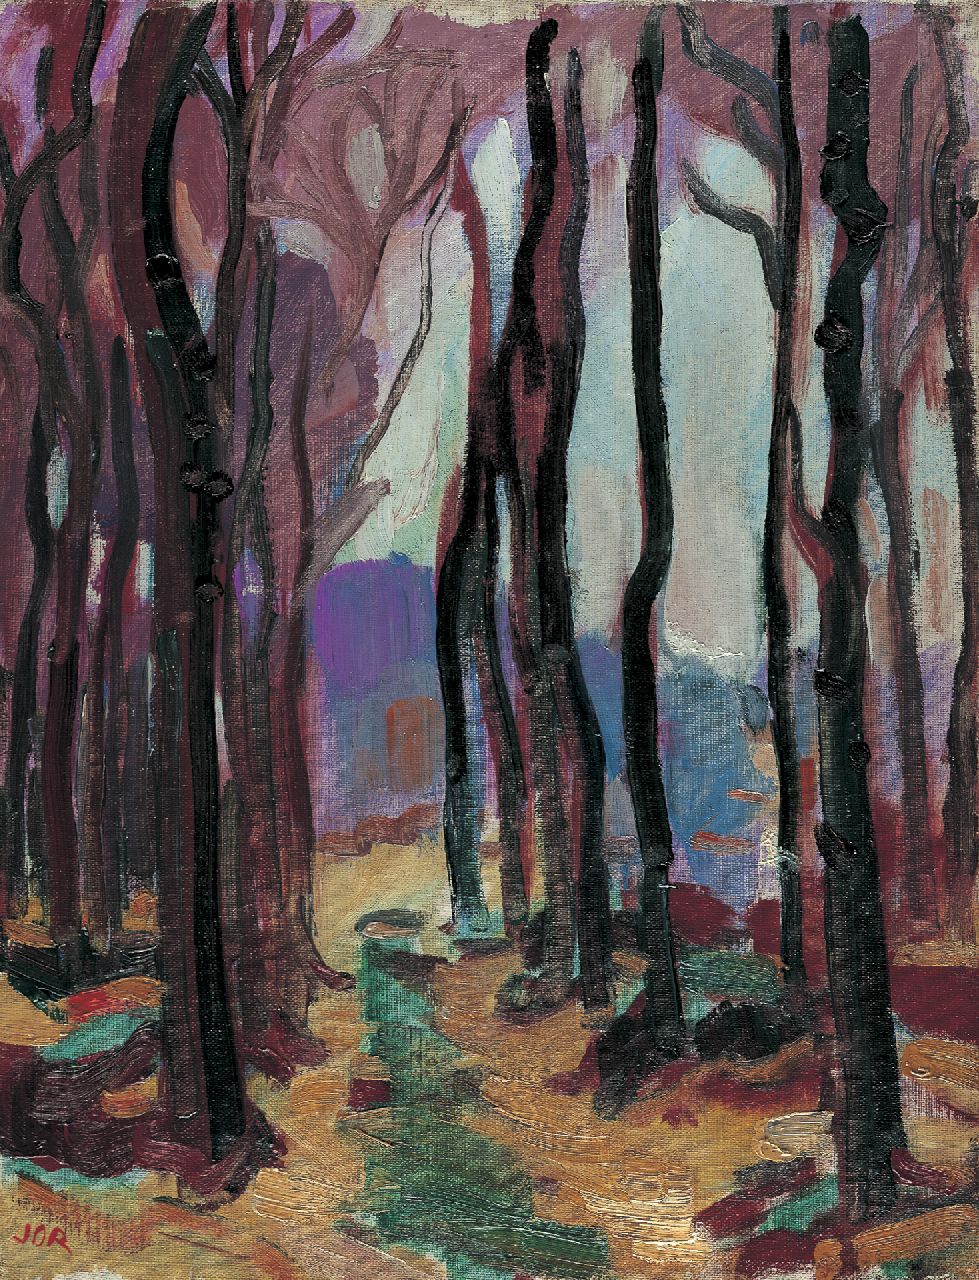 Jordens J.G.  | 'Jan' Gerrit Jordens, A wooded landscape, oil on canvas 42.2 x 32.5 cm, signed l.l. with monogram and dated 1930 on the reverse